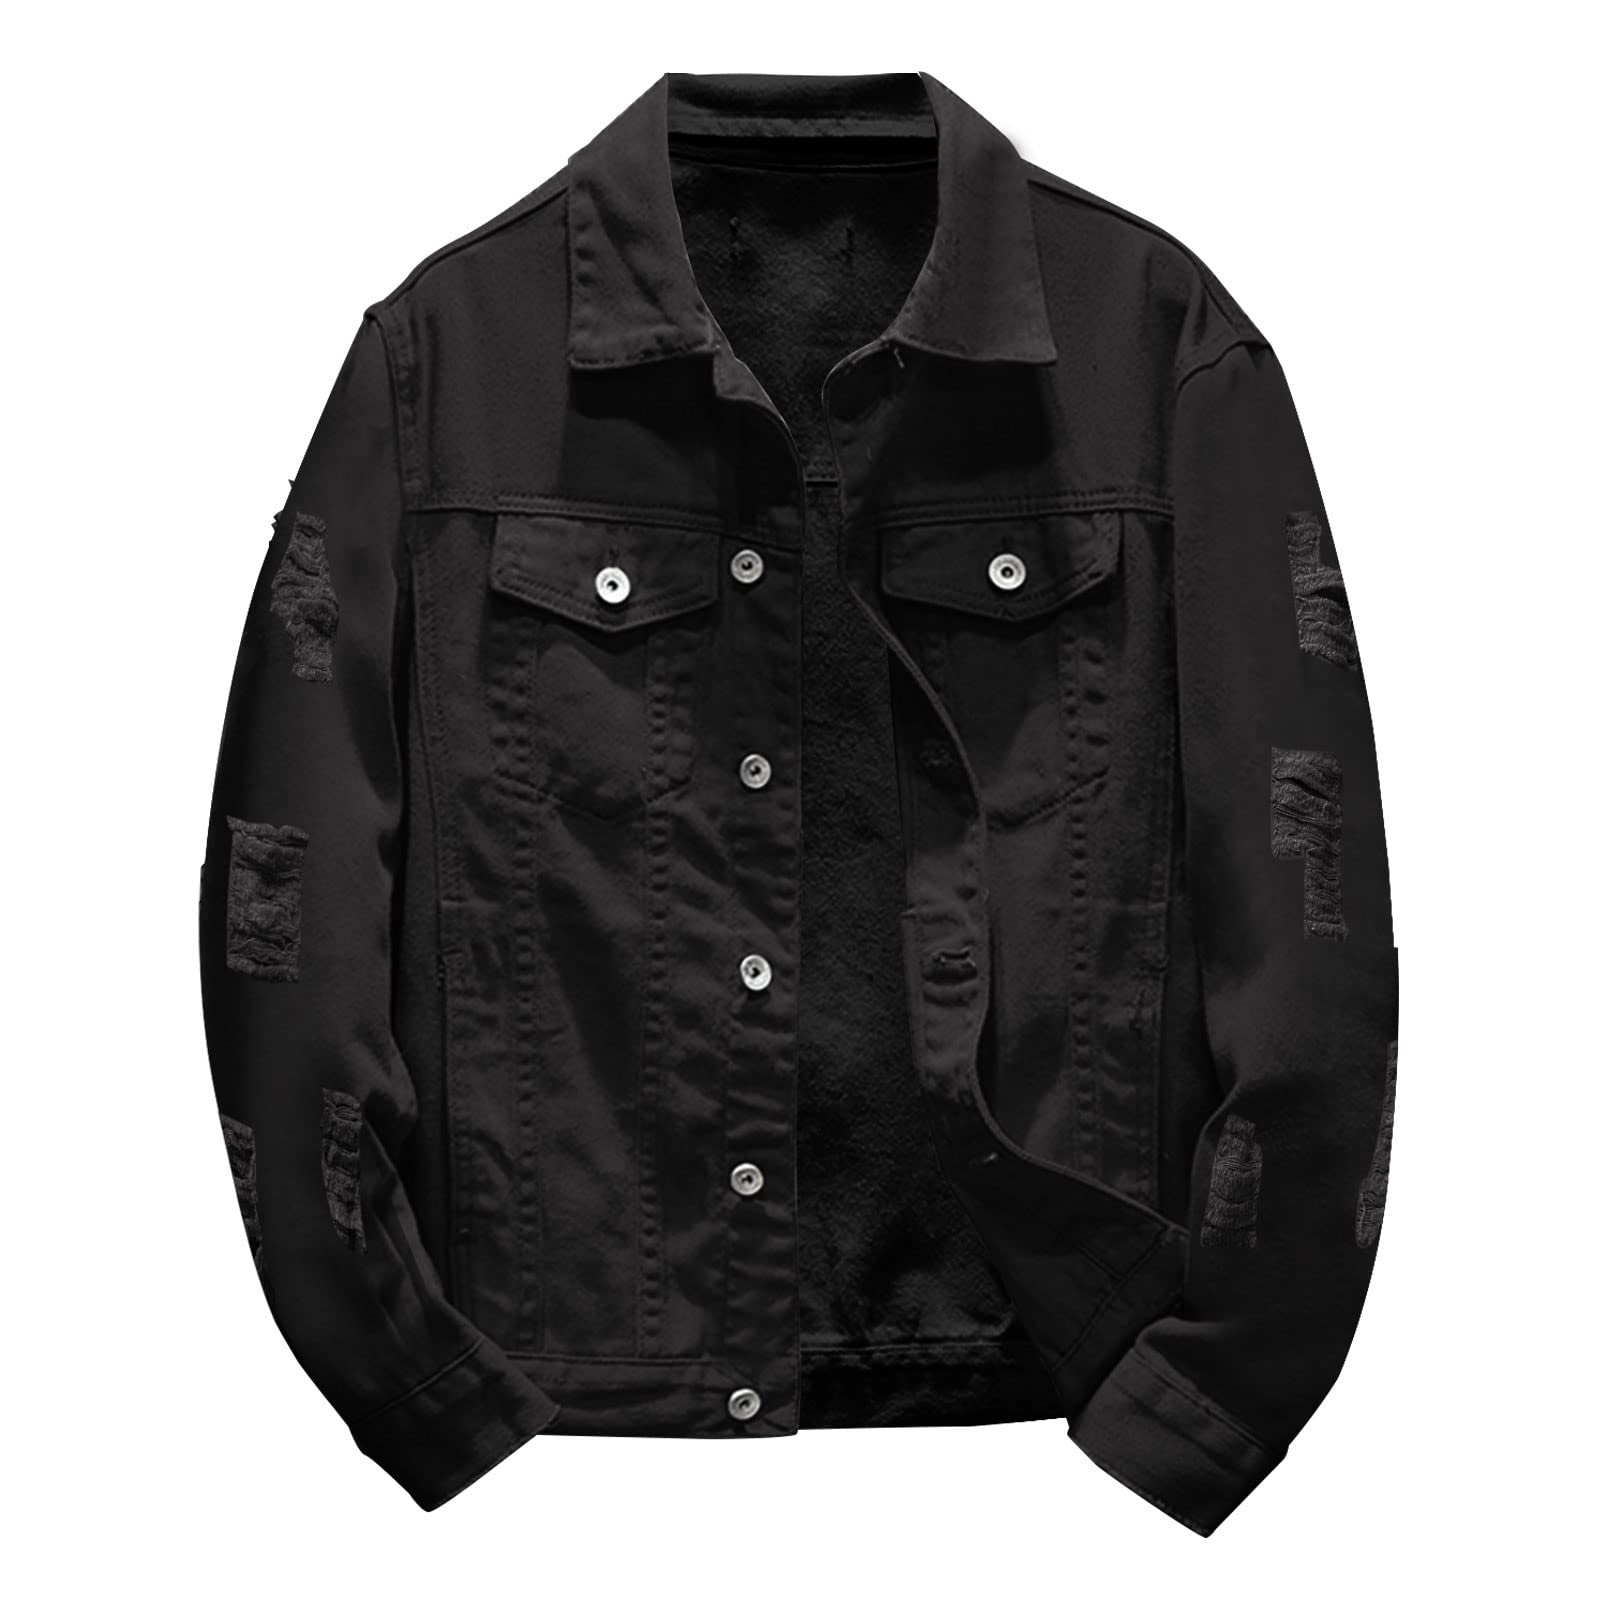 Black denim jacket men's, in the realm of men's fashion, few garments possess the enduring appeal and versatility of the black denim jacket.